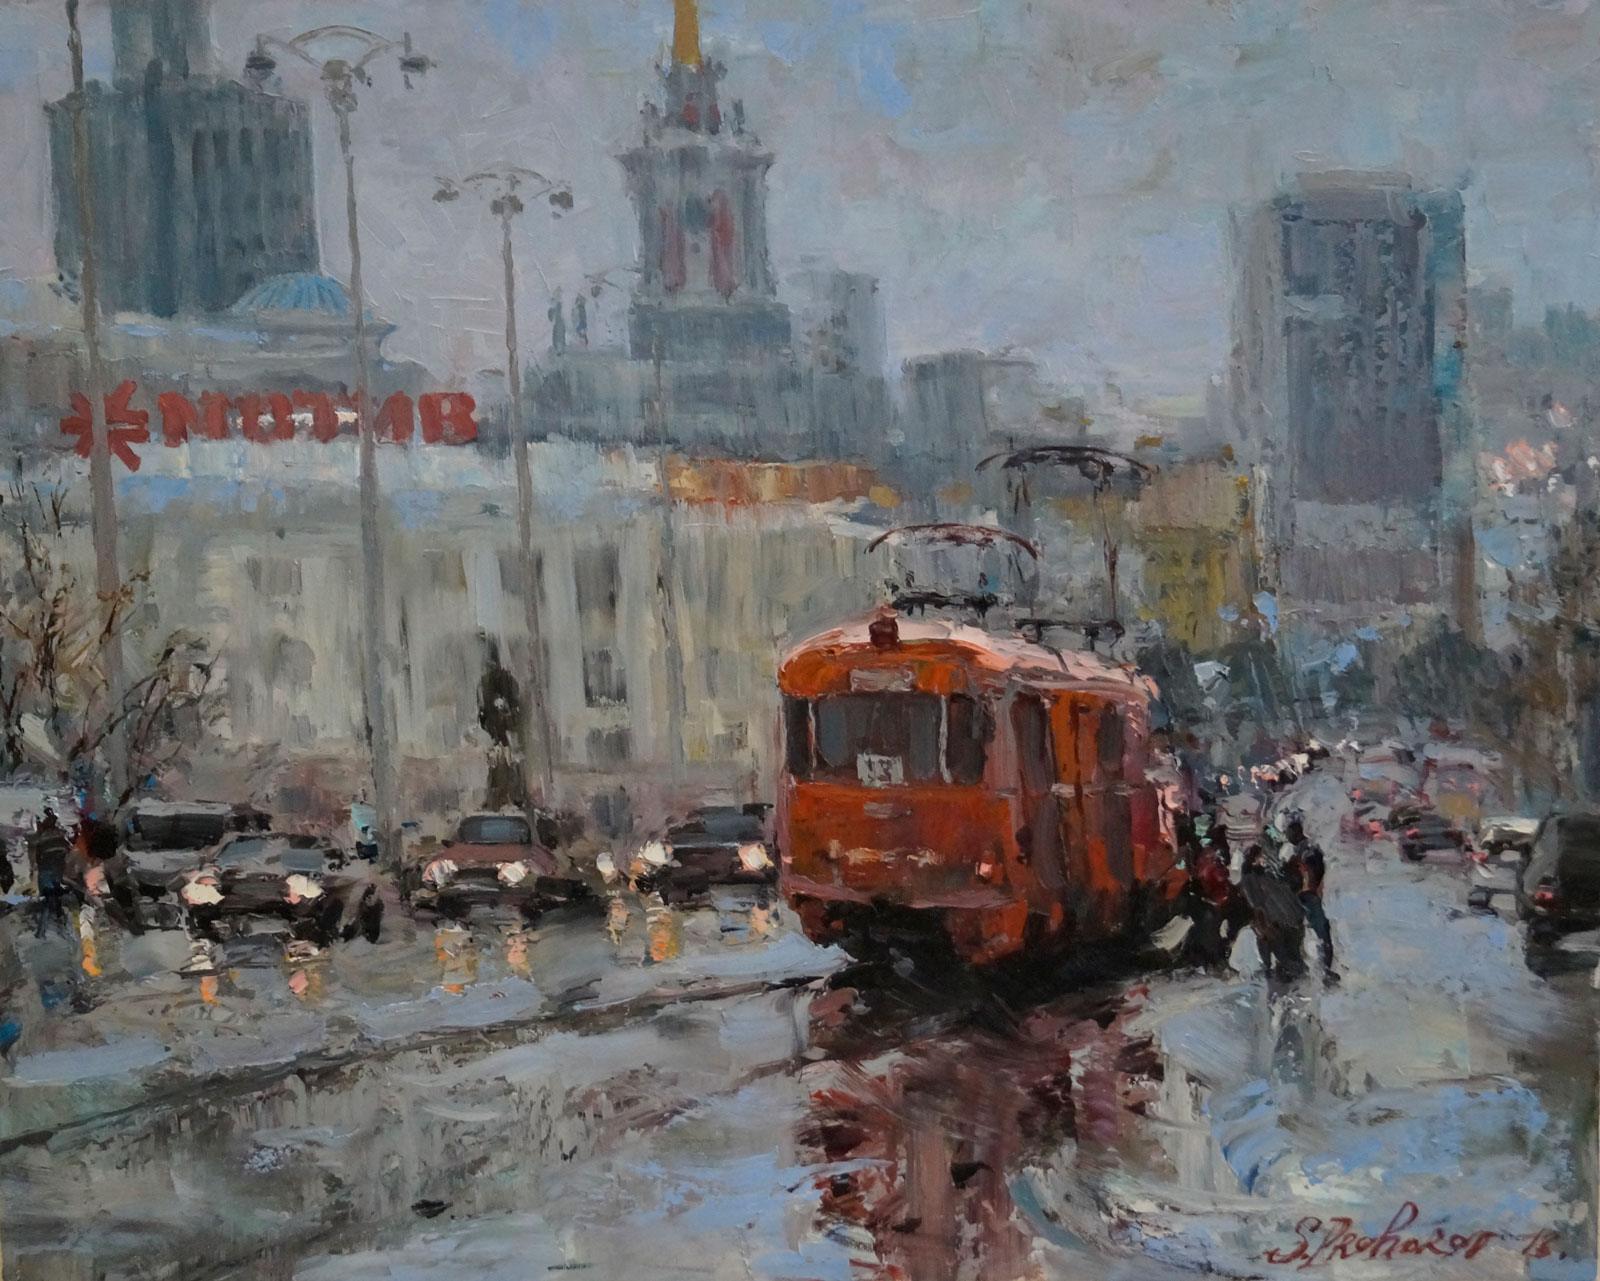 Motive, Sergei Prokhorov, Buy the painting Oil